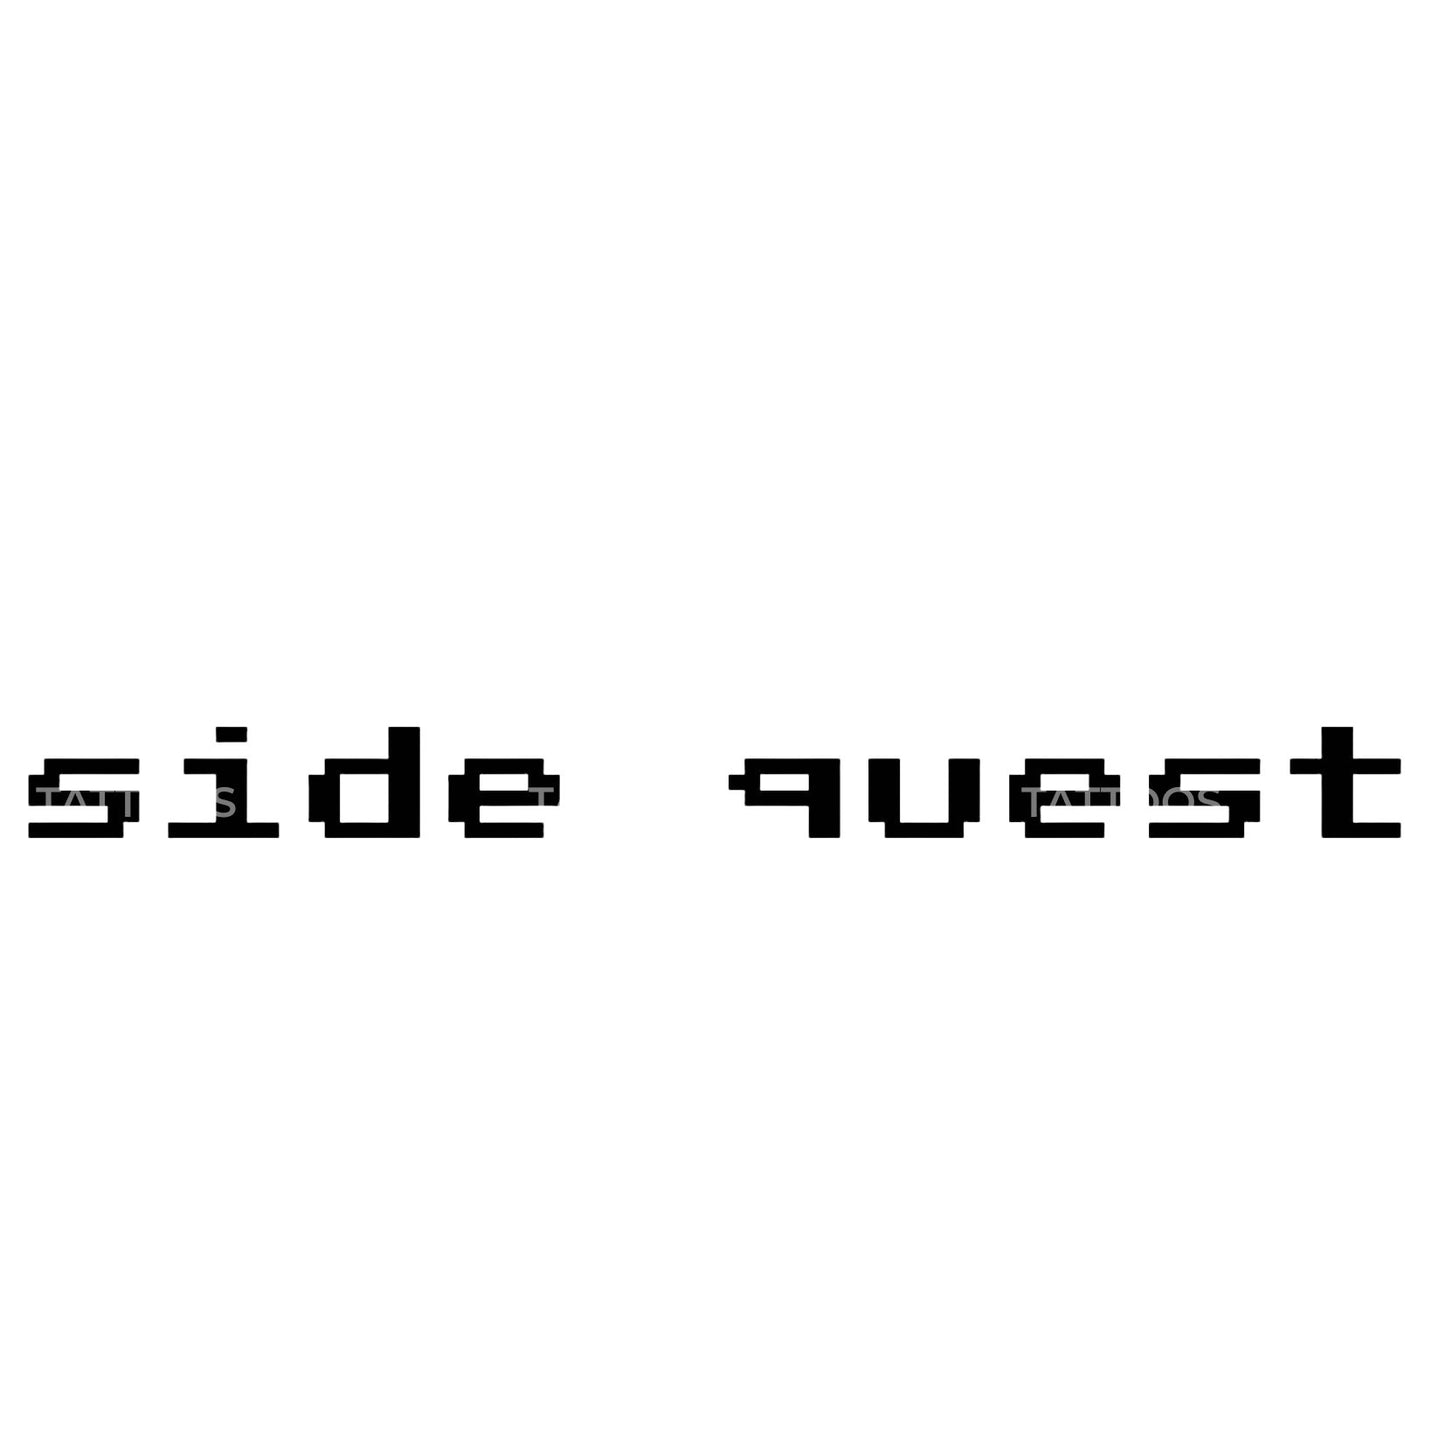 Side Quest Fun Code Lettering Tattoo Design